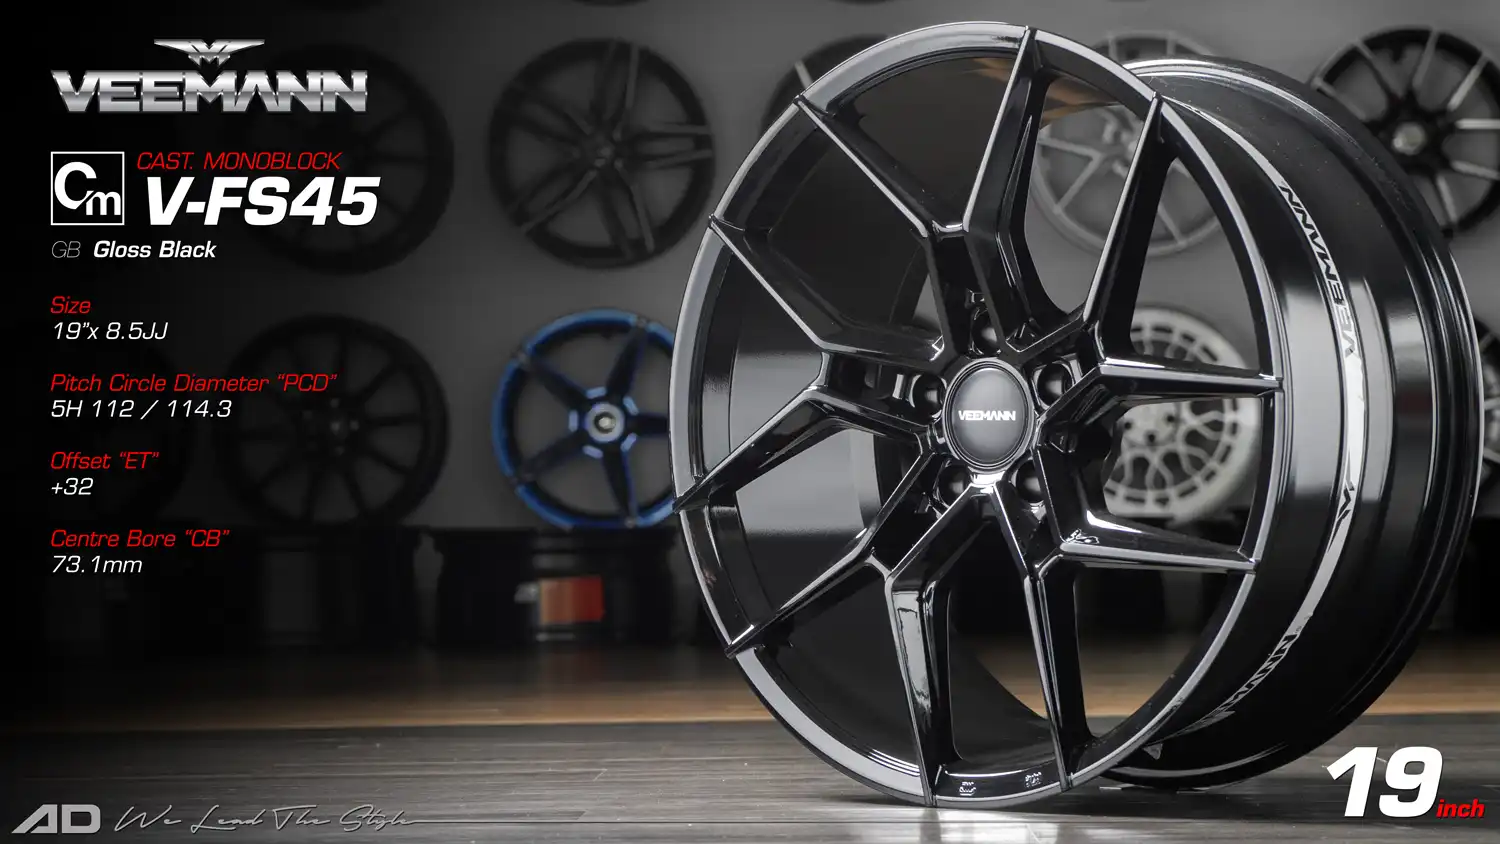 Ad wheels | Veemann v-fs45 19 inch 5H112/114.3